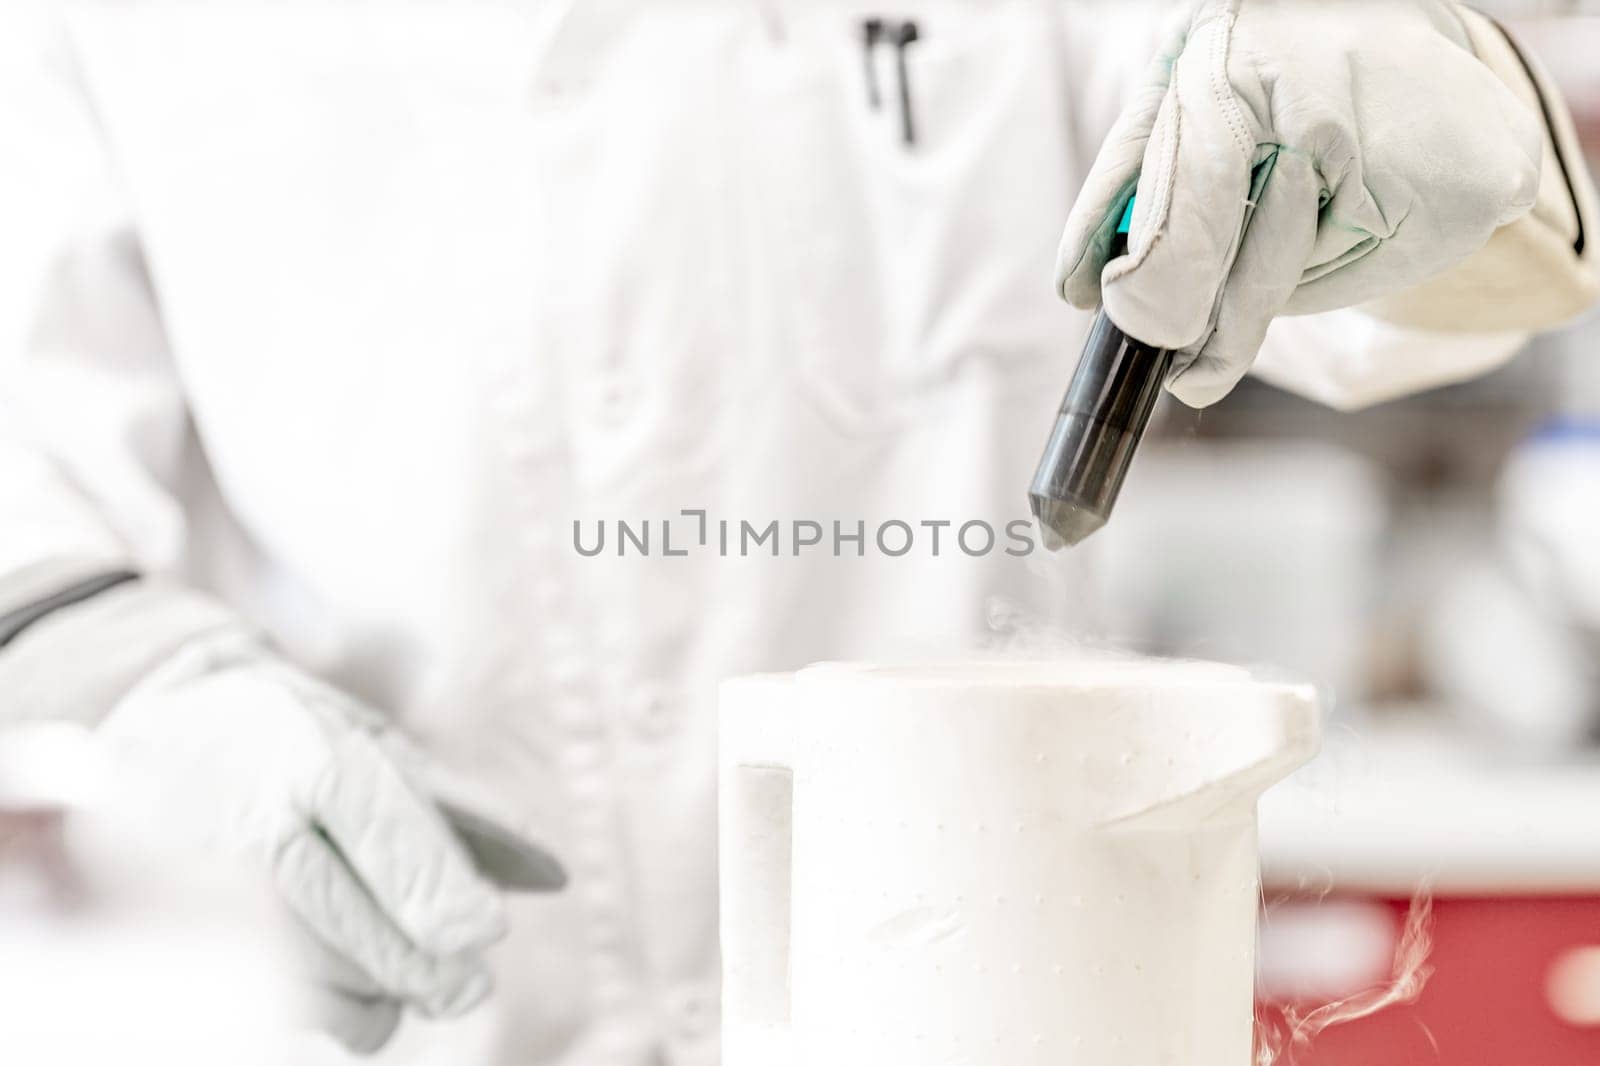 scientific experiments with liquid nitrogen in a research laboratory.